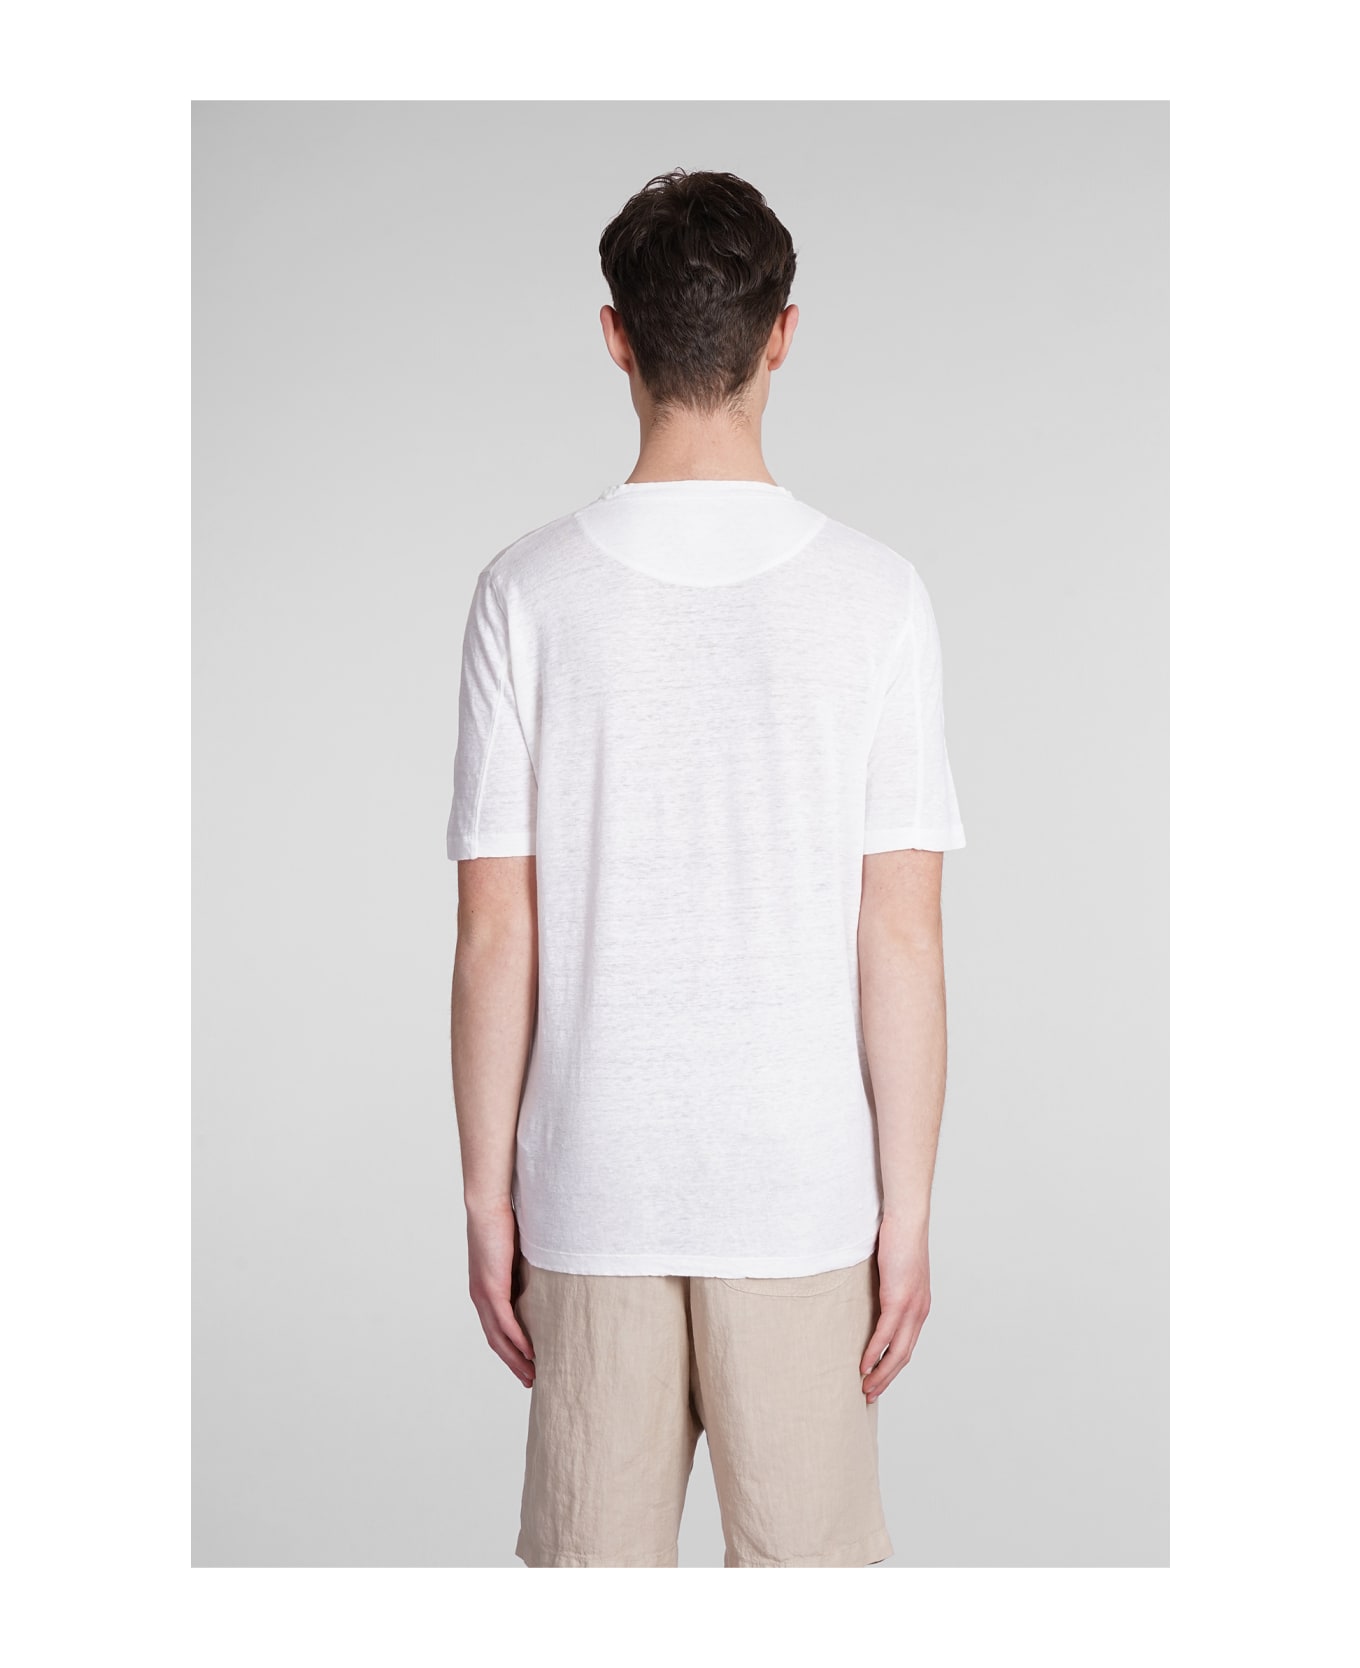 120% Lino T-shirt In White Linen - white シャツ